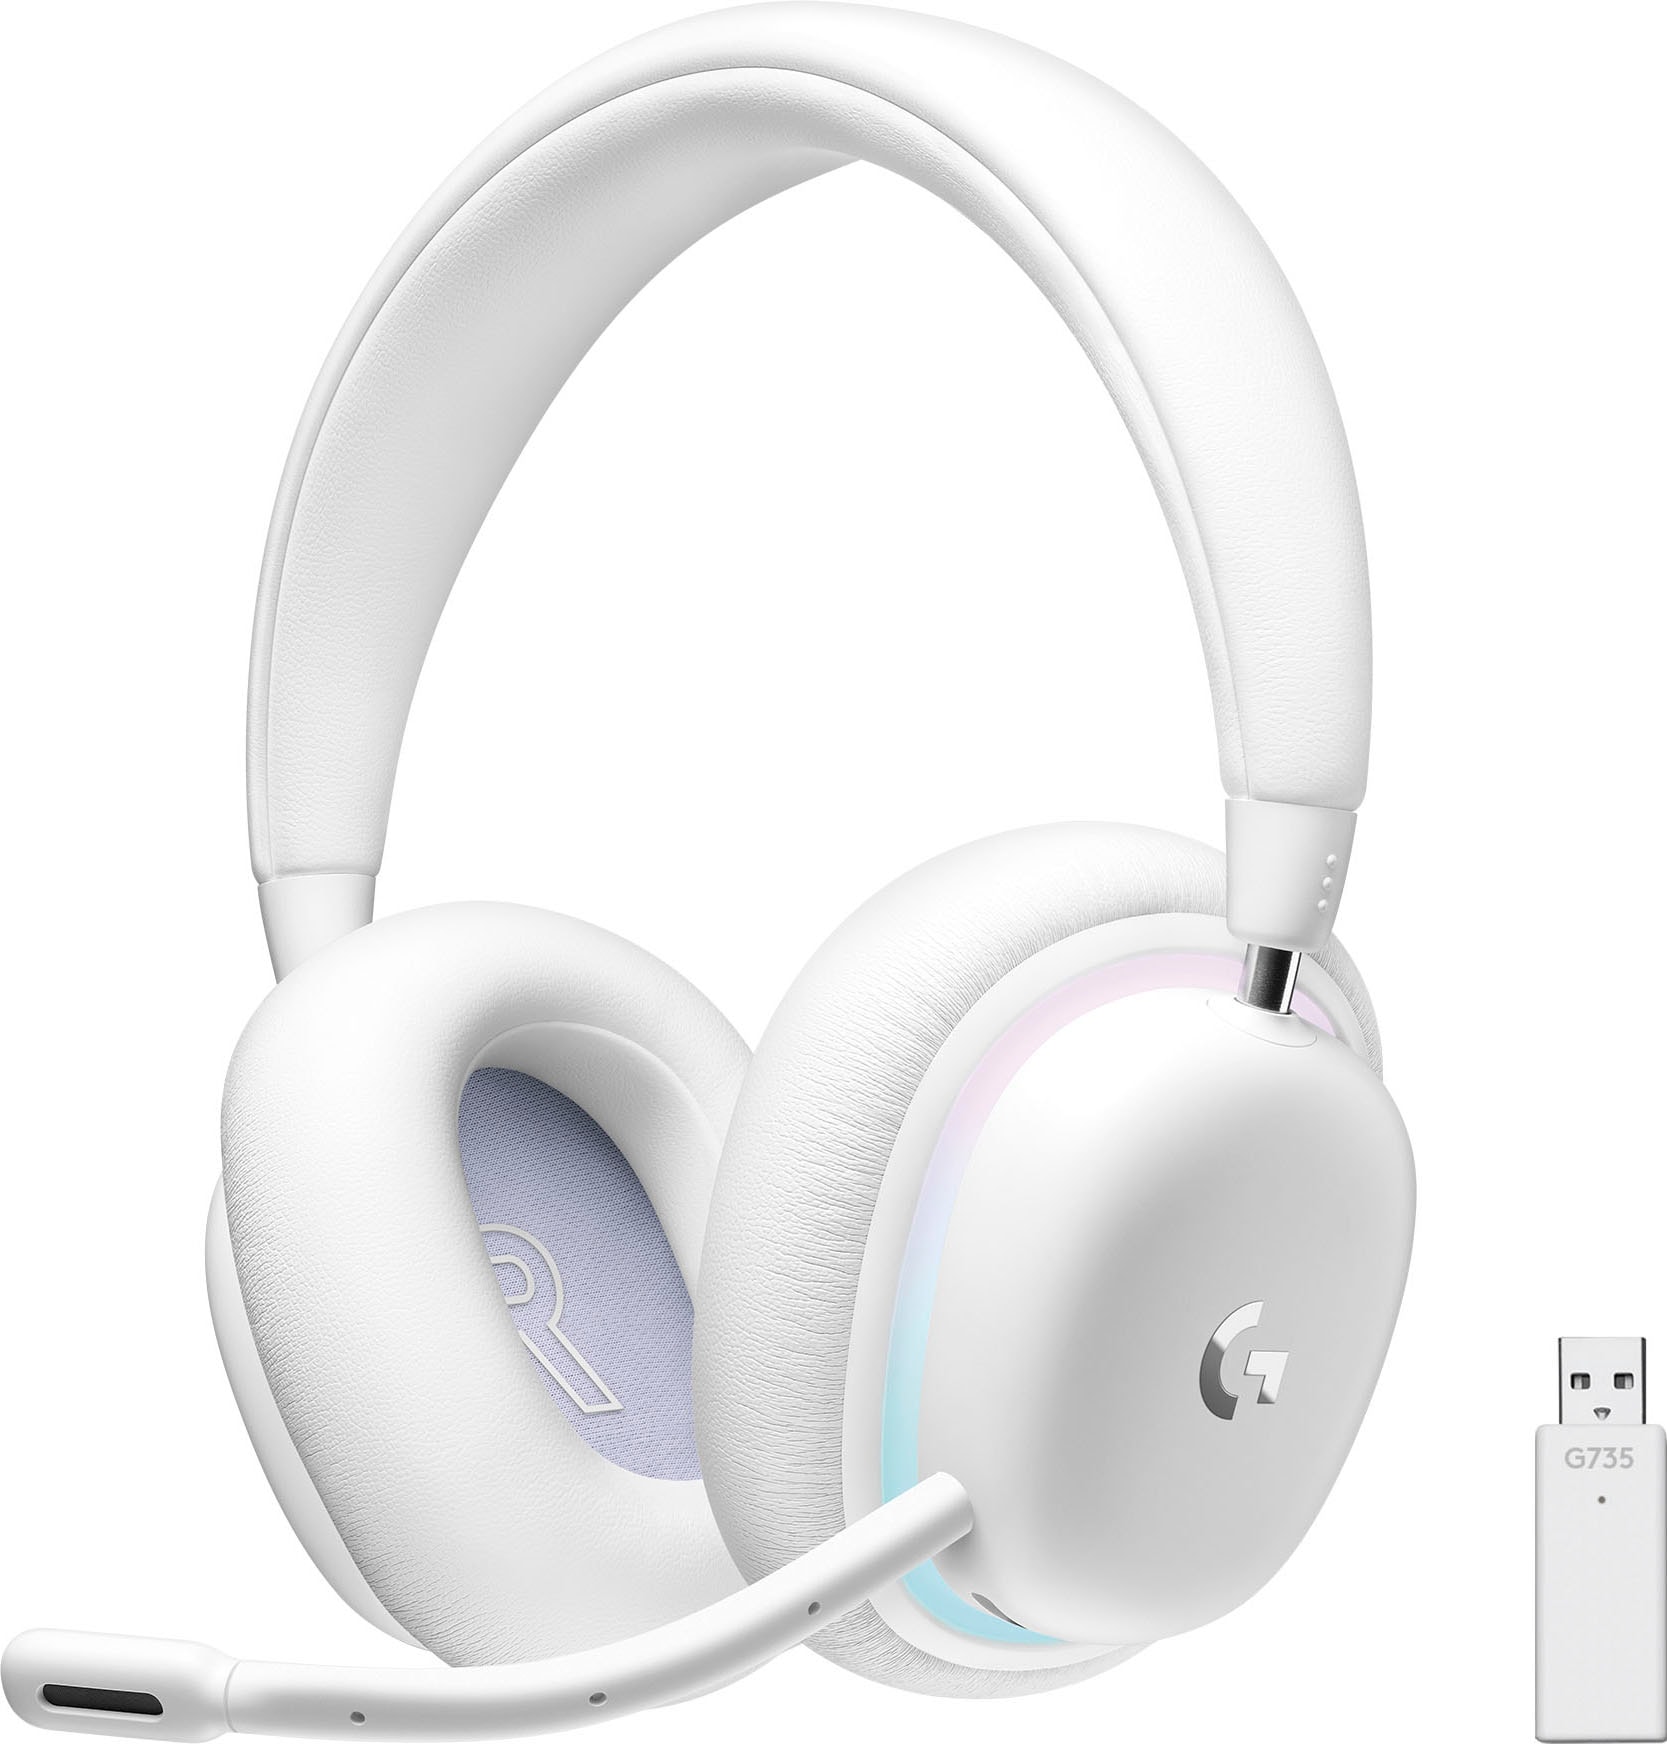 Mikrofon Logitech bei Gaming-Headset jetzt G Bluetooth, OTTO »G735«, abnehmbar